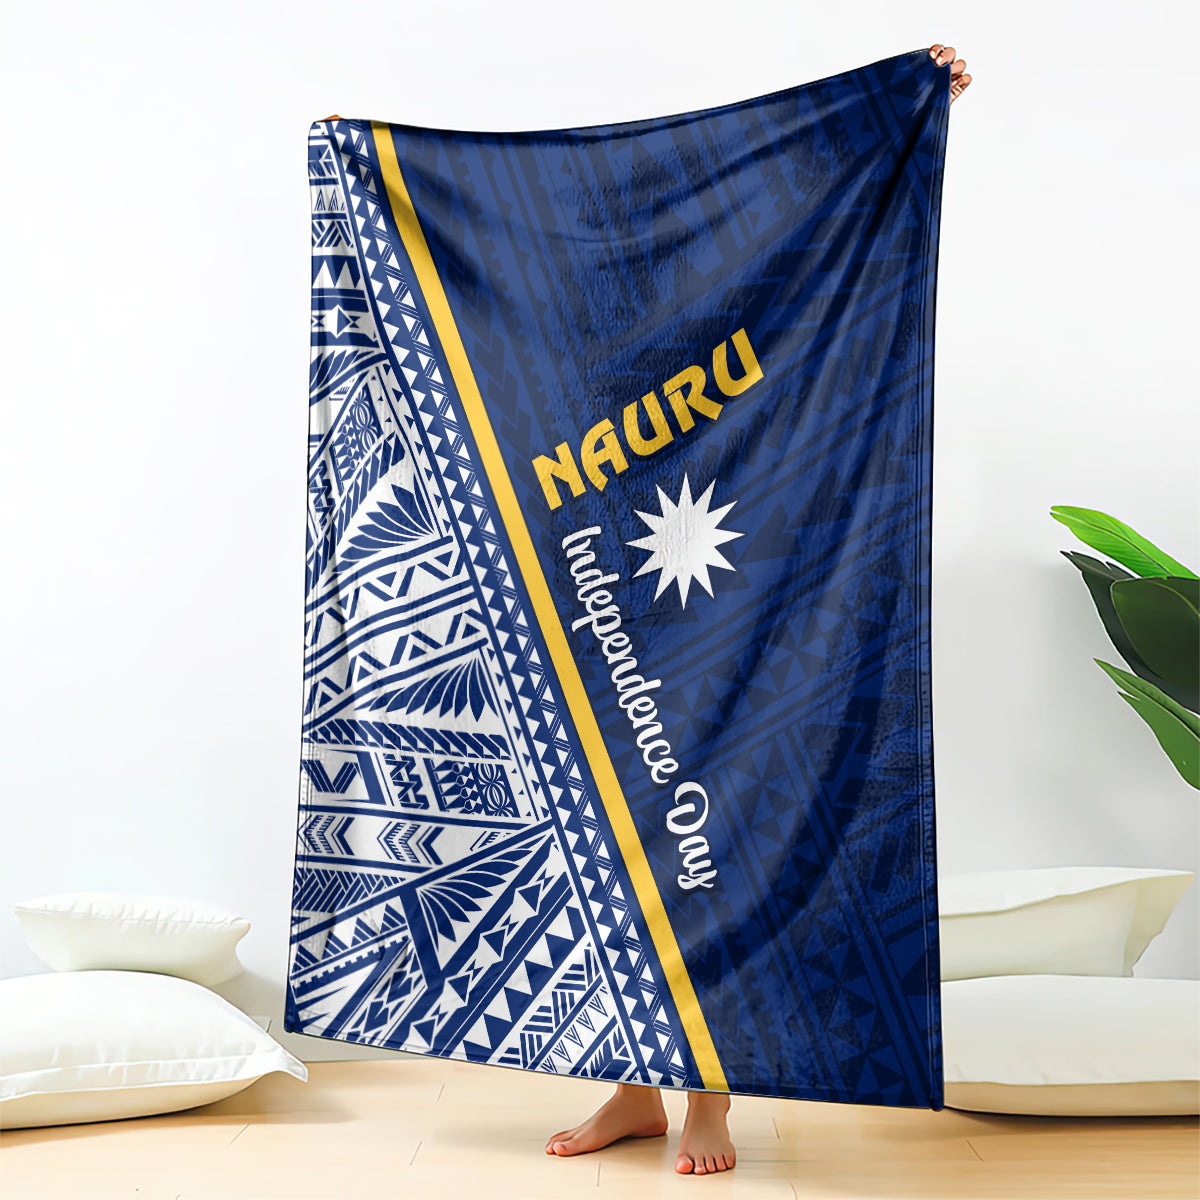 Nauru Independence Day Blanket Repubrikin Naoero Gods Will First LT01 Blue - Polynesian Pride